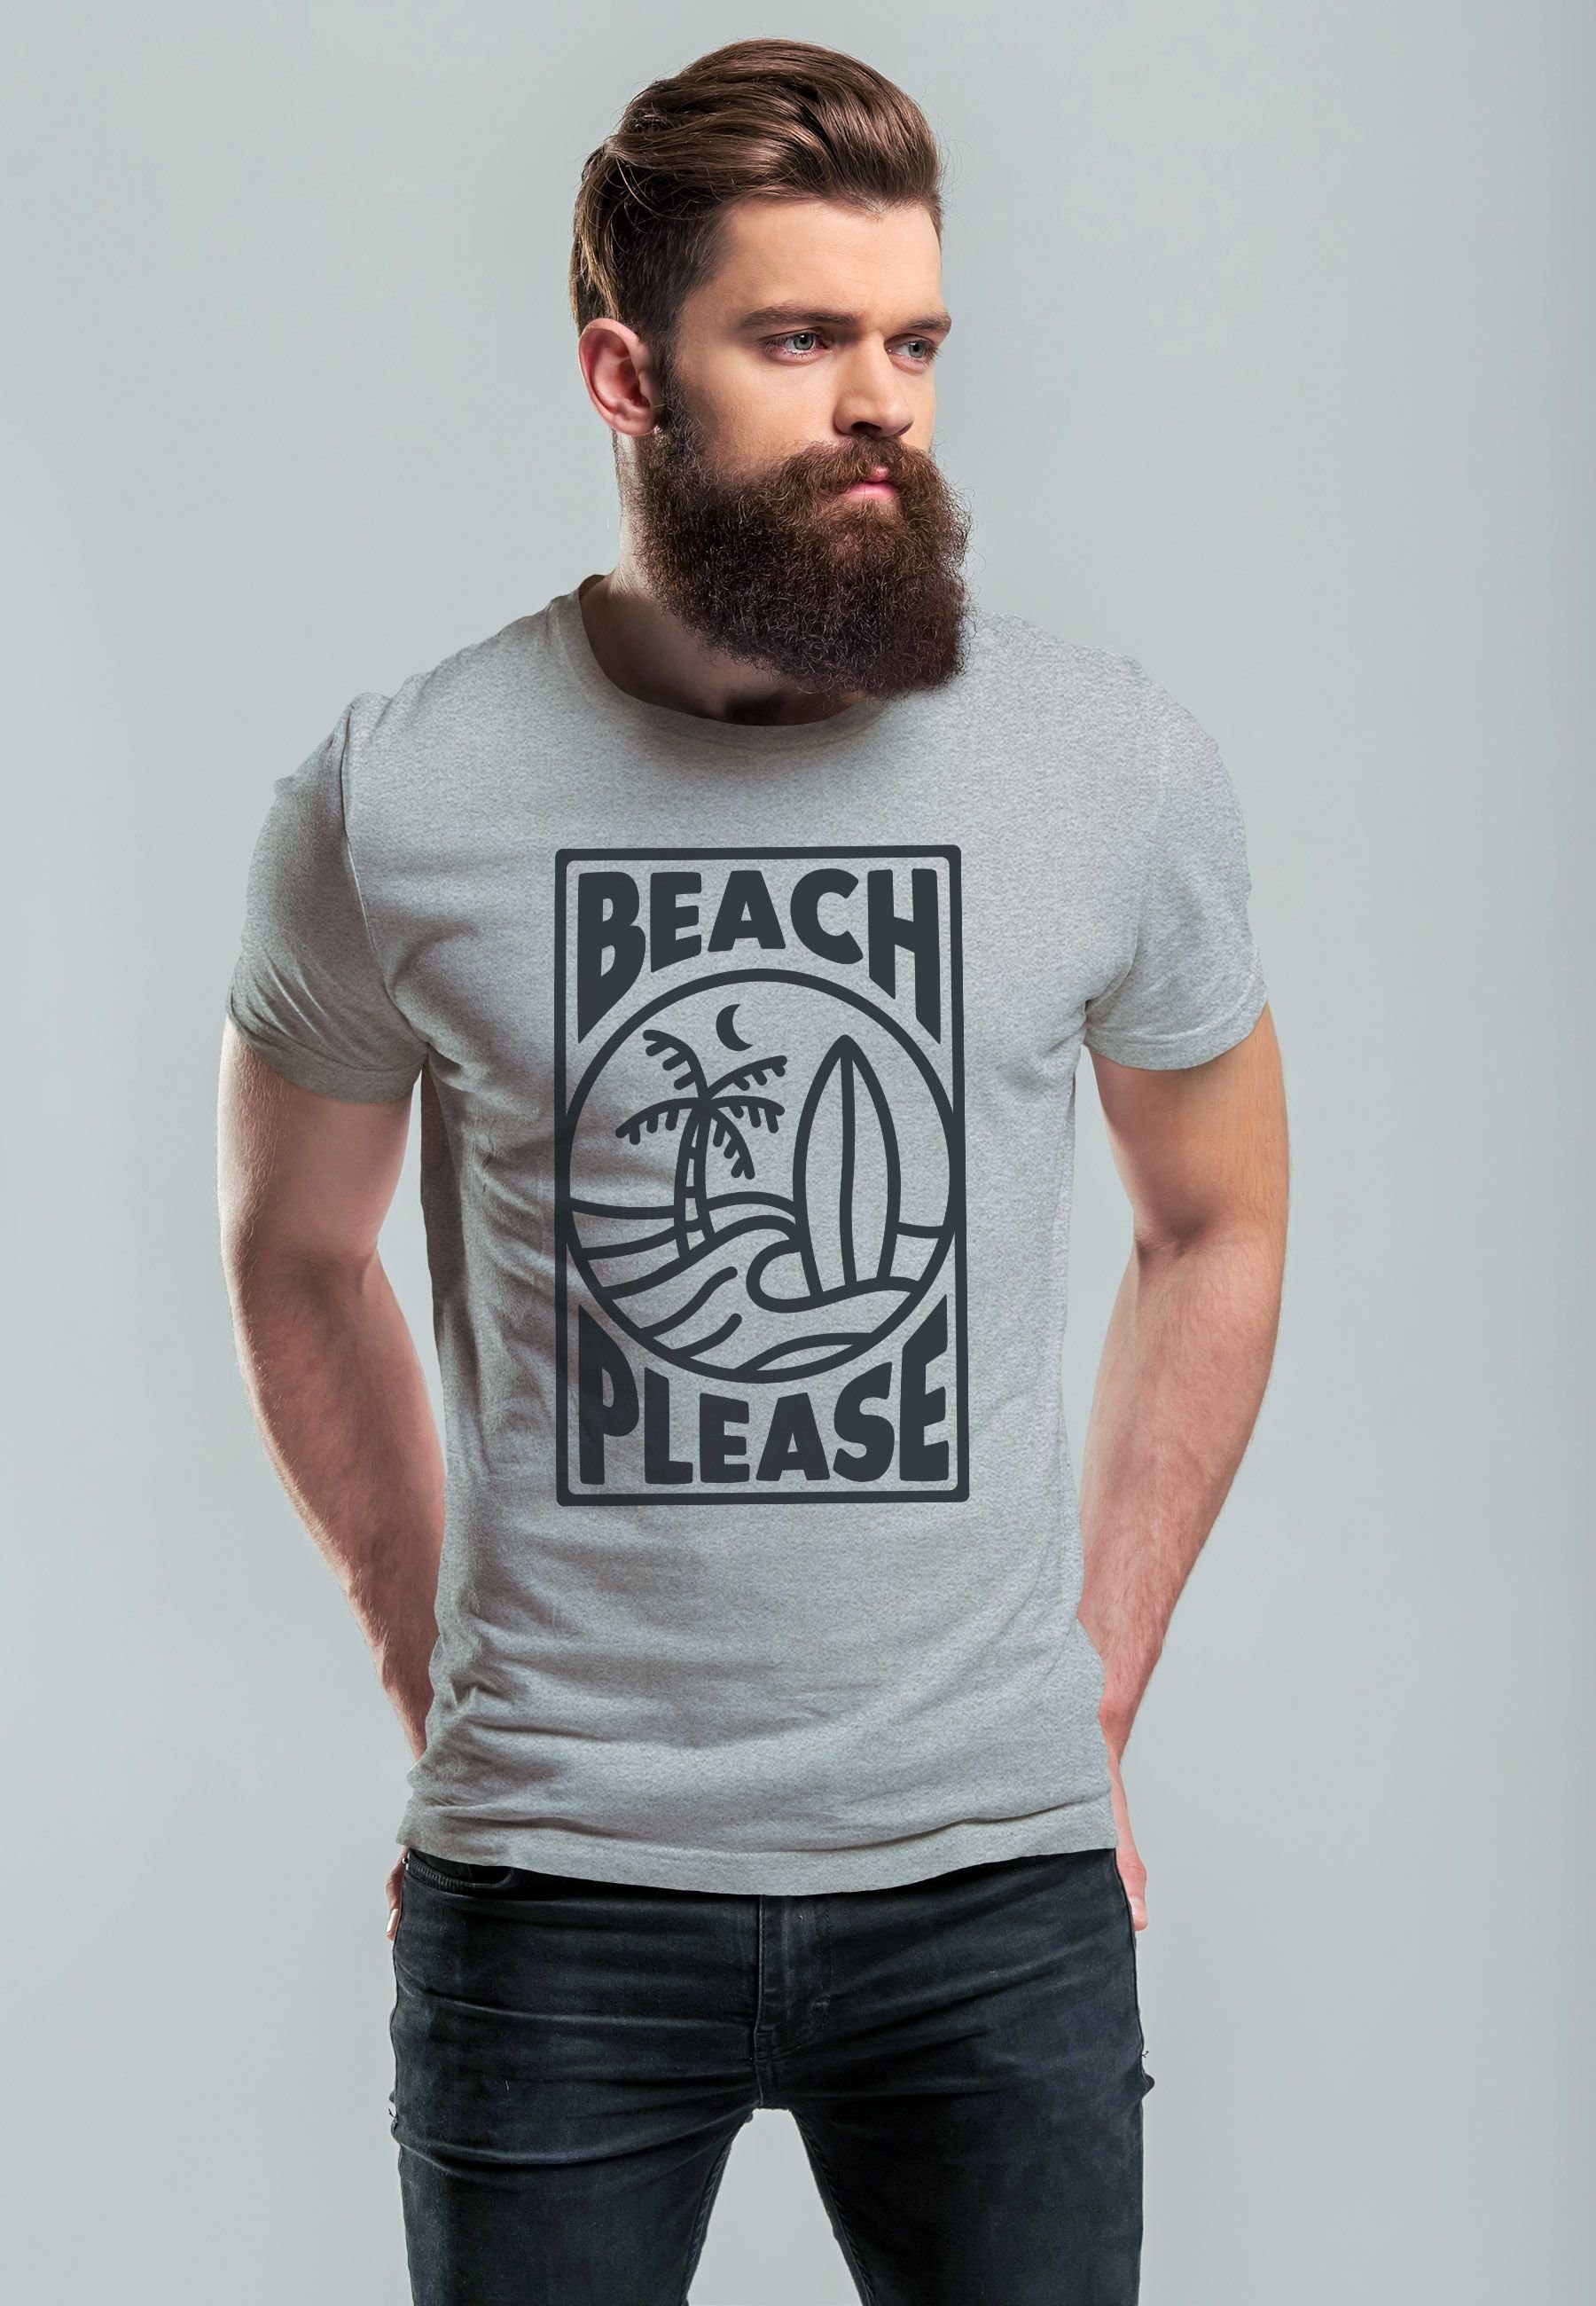 Print Wave T-Shirt Please mit Sommer Welle Print-Shirt Beach Surfboard Herren grau Print Neverless Surfing